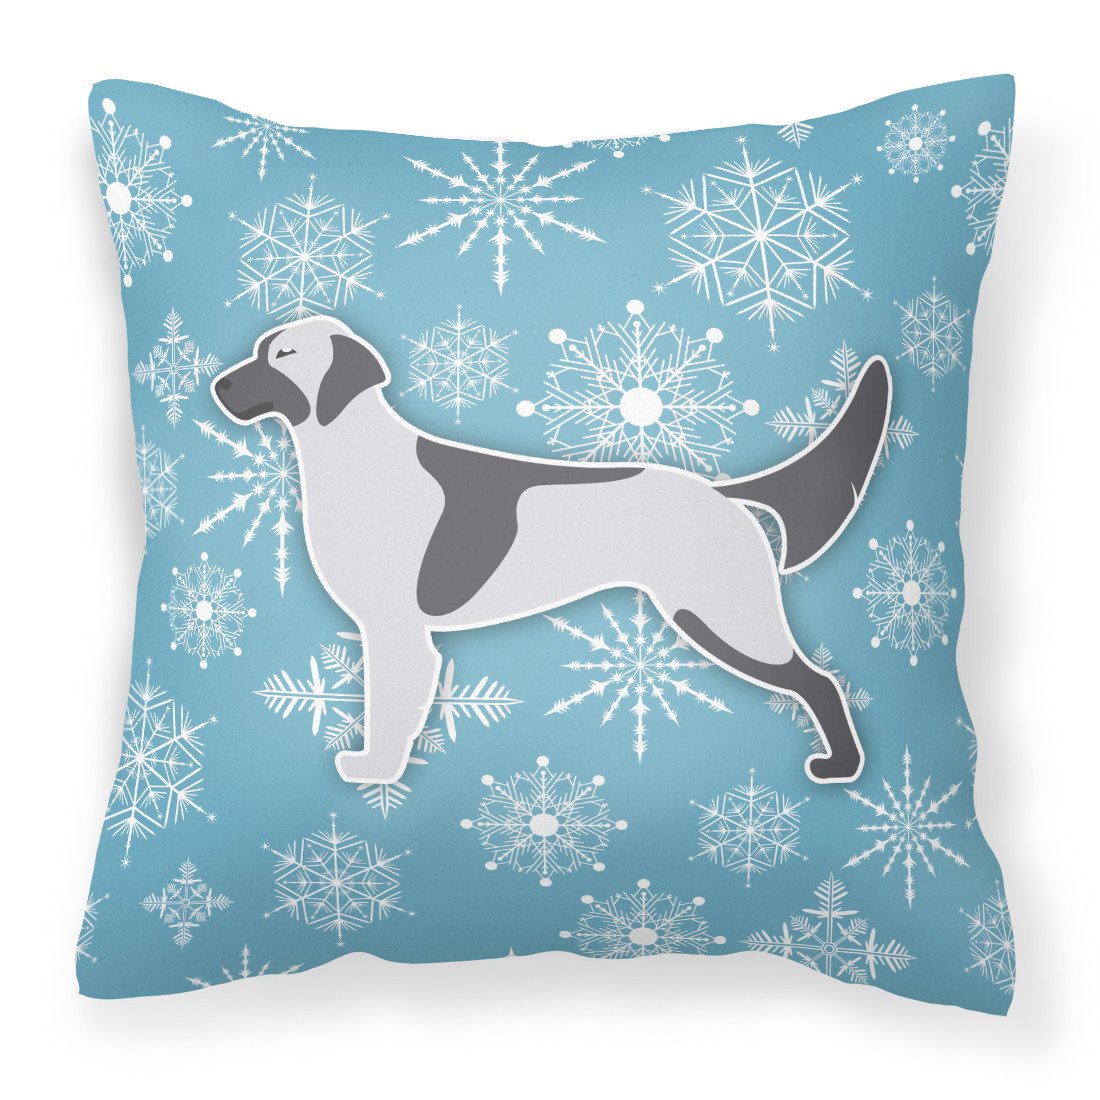 Winter Snowflake English Setter Fabric Decorative Pillow BB3481PW1818 by Caroline's Treasures